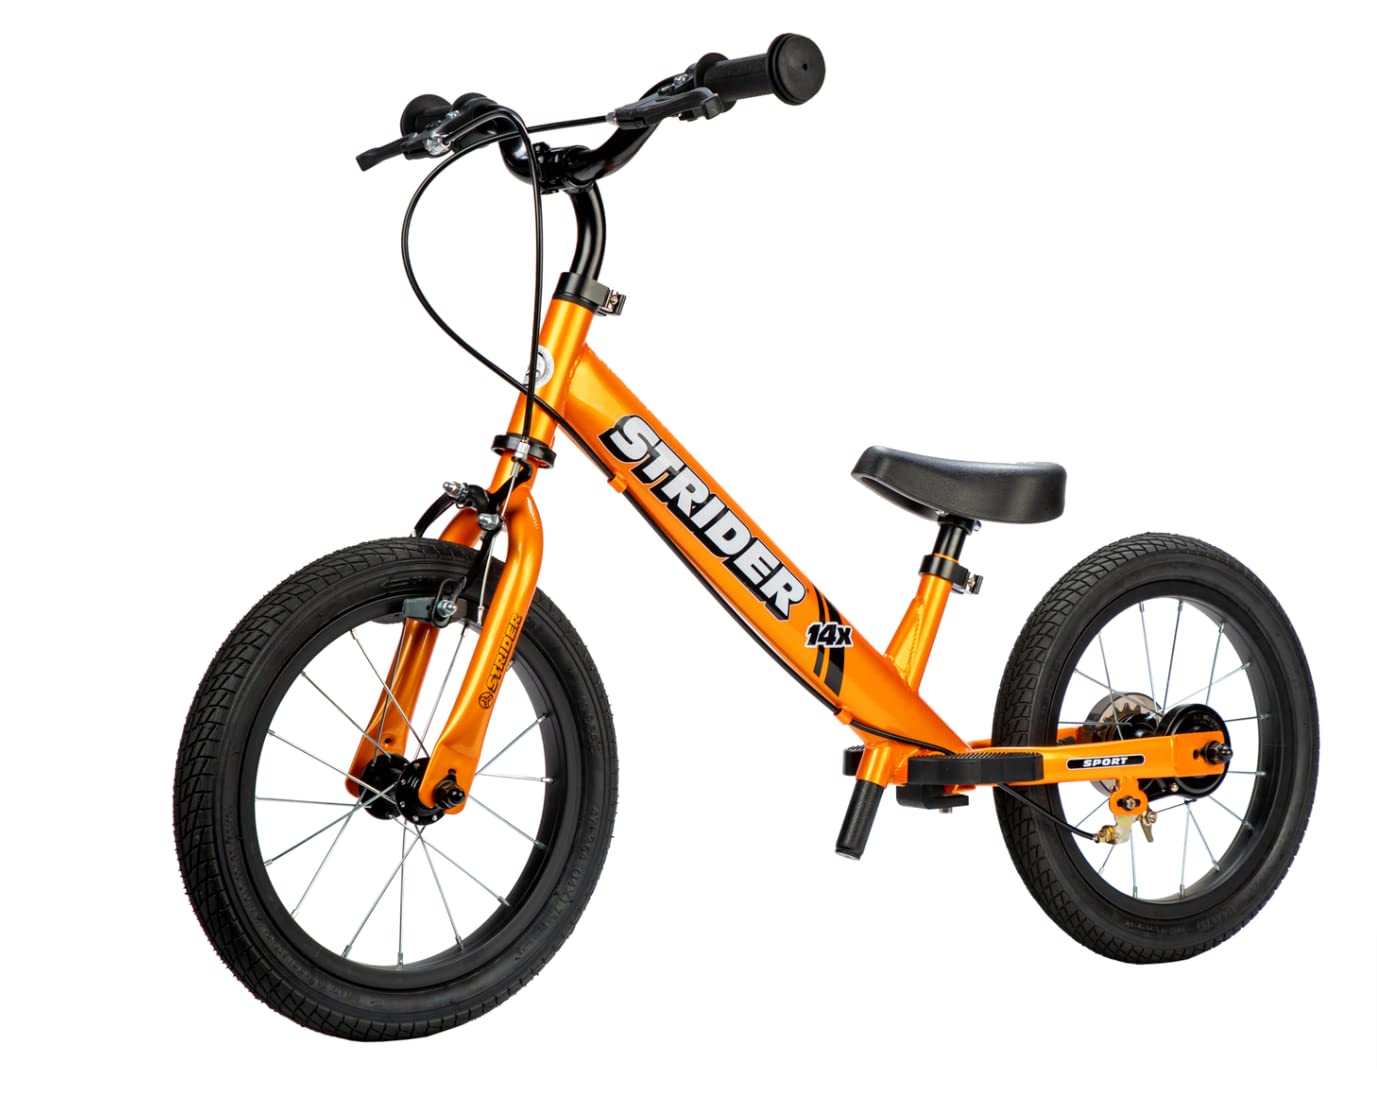 Strider 14x - Balance Bike for Kids